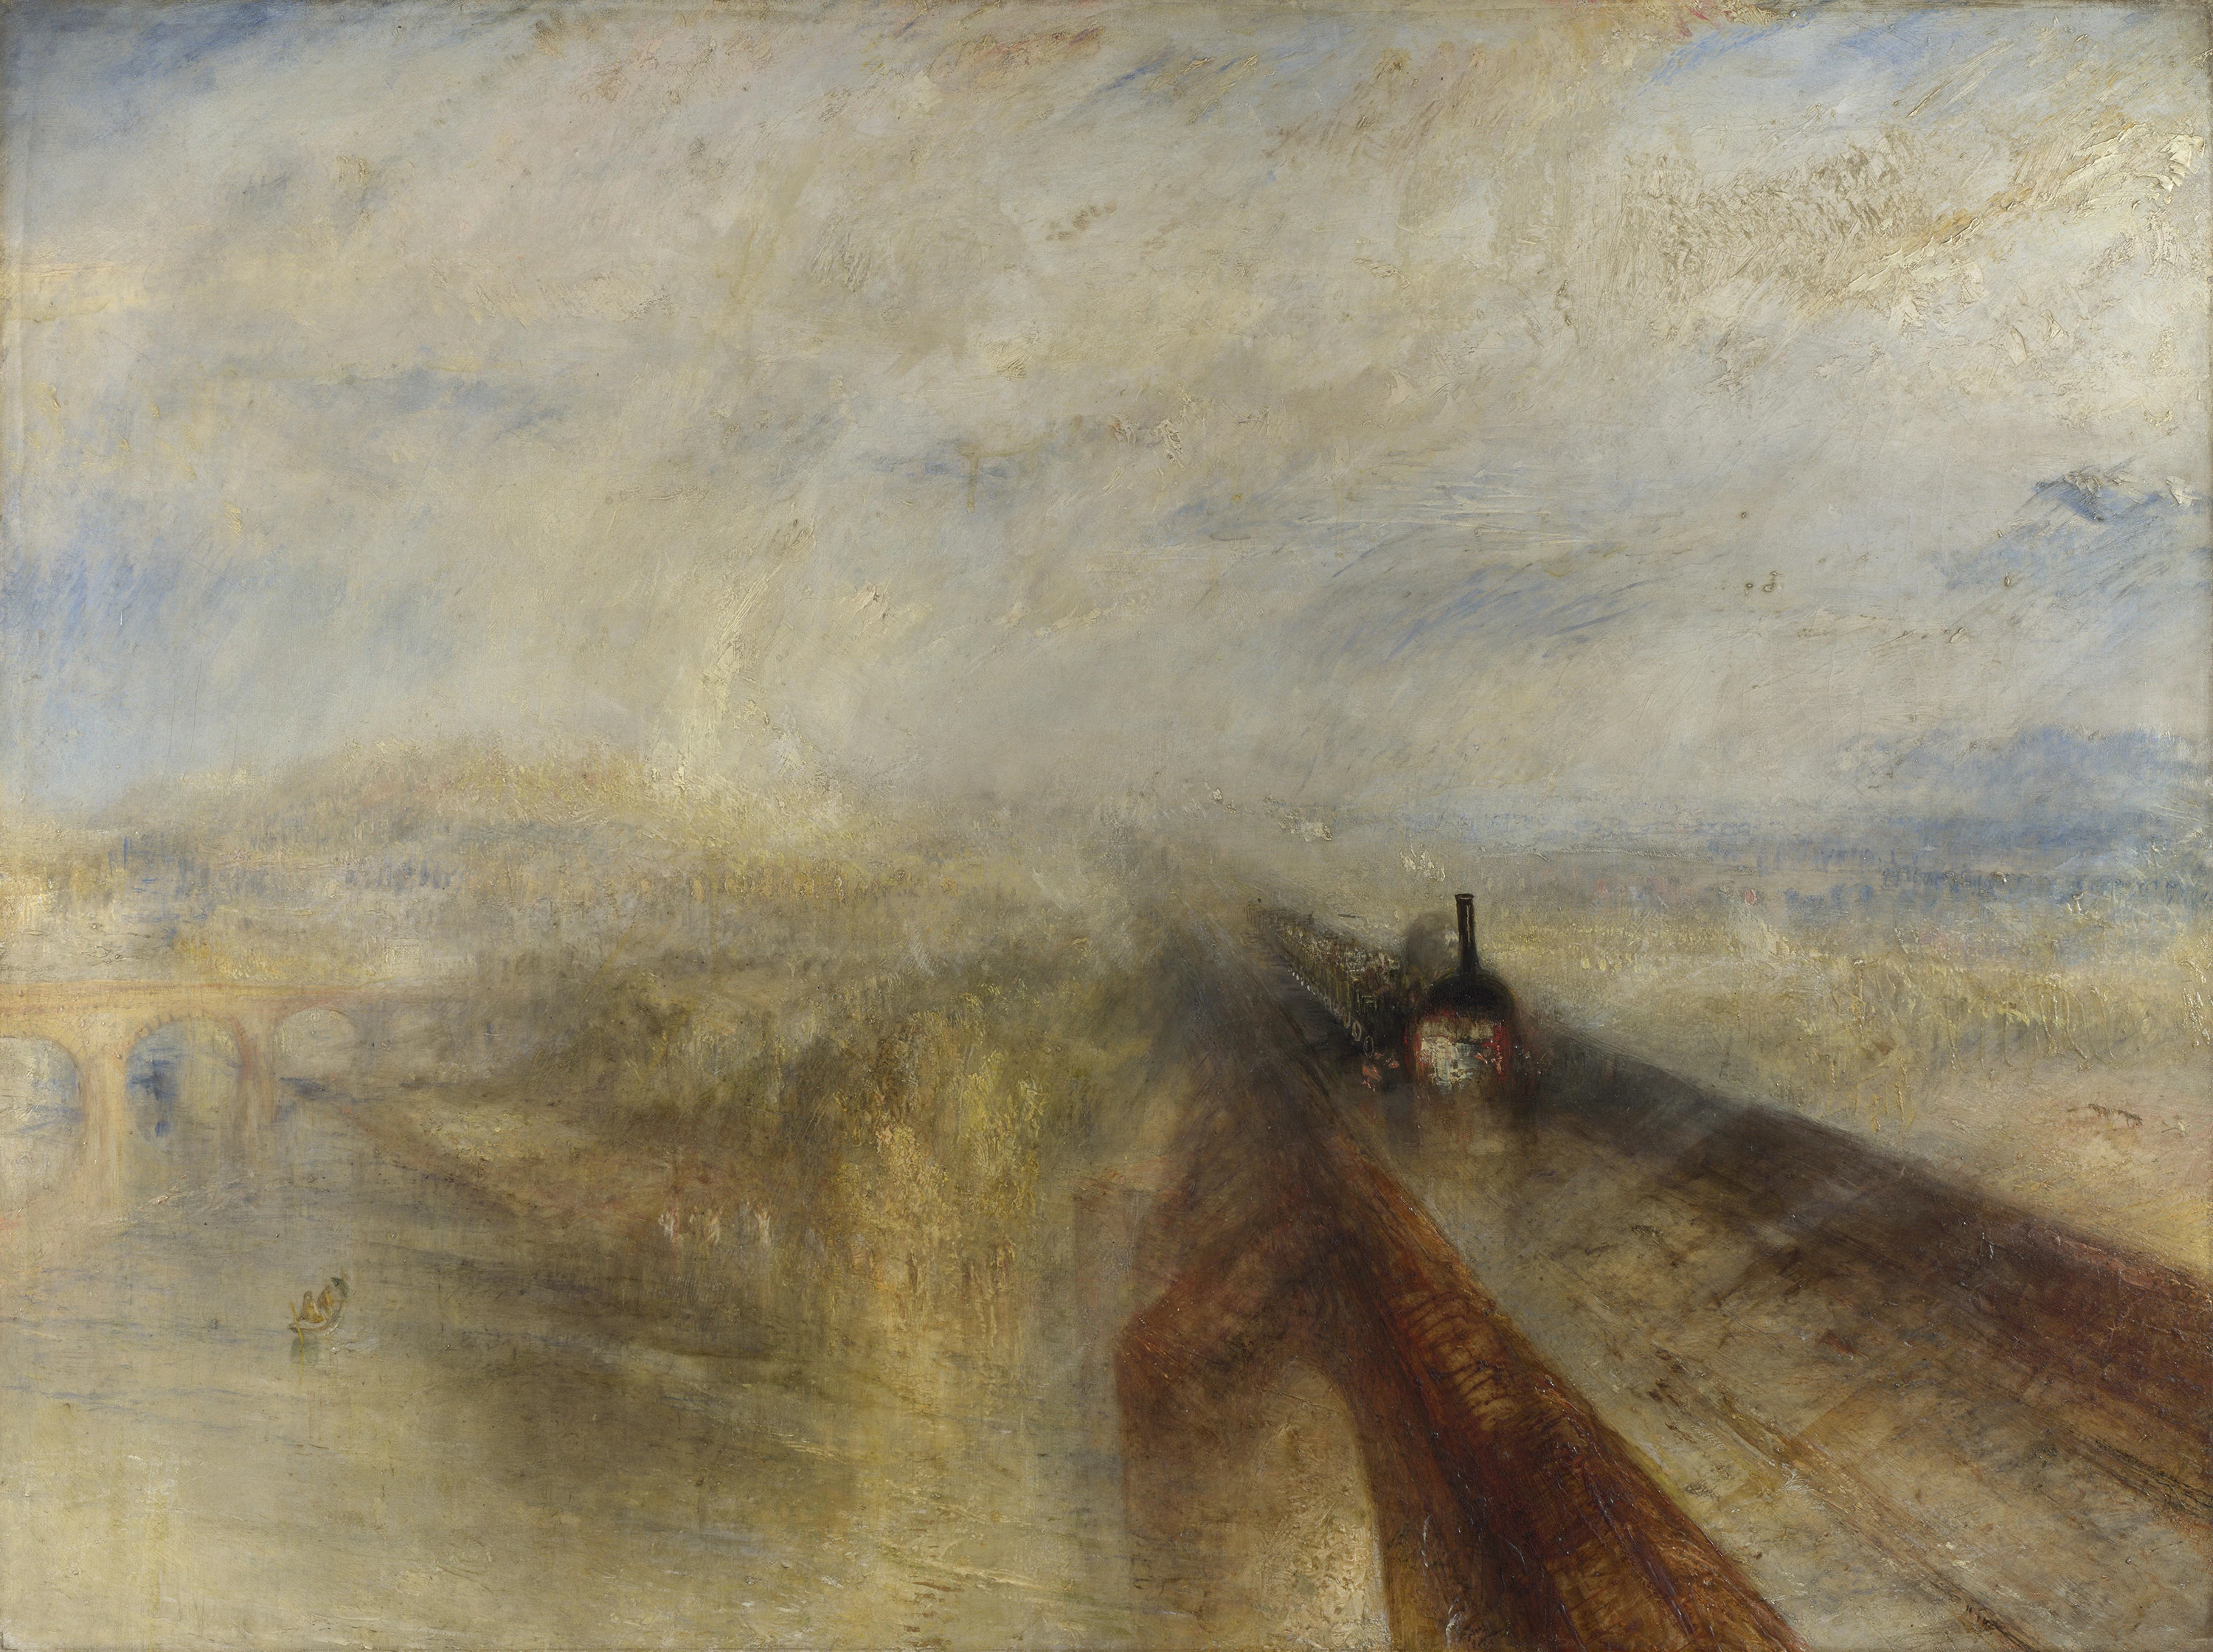 Rain, Steam, and Speed - The Great Western Railway, Joseph Mallord William Turner